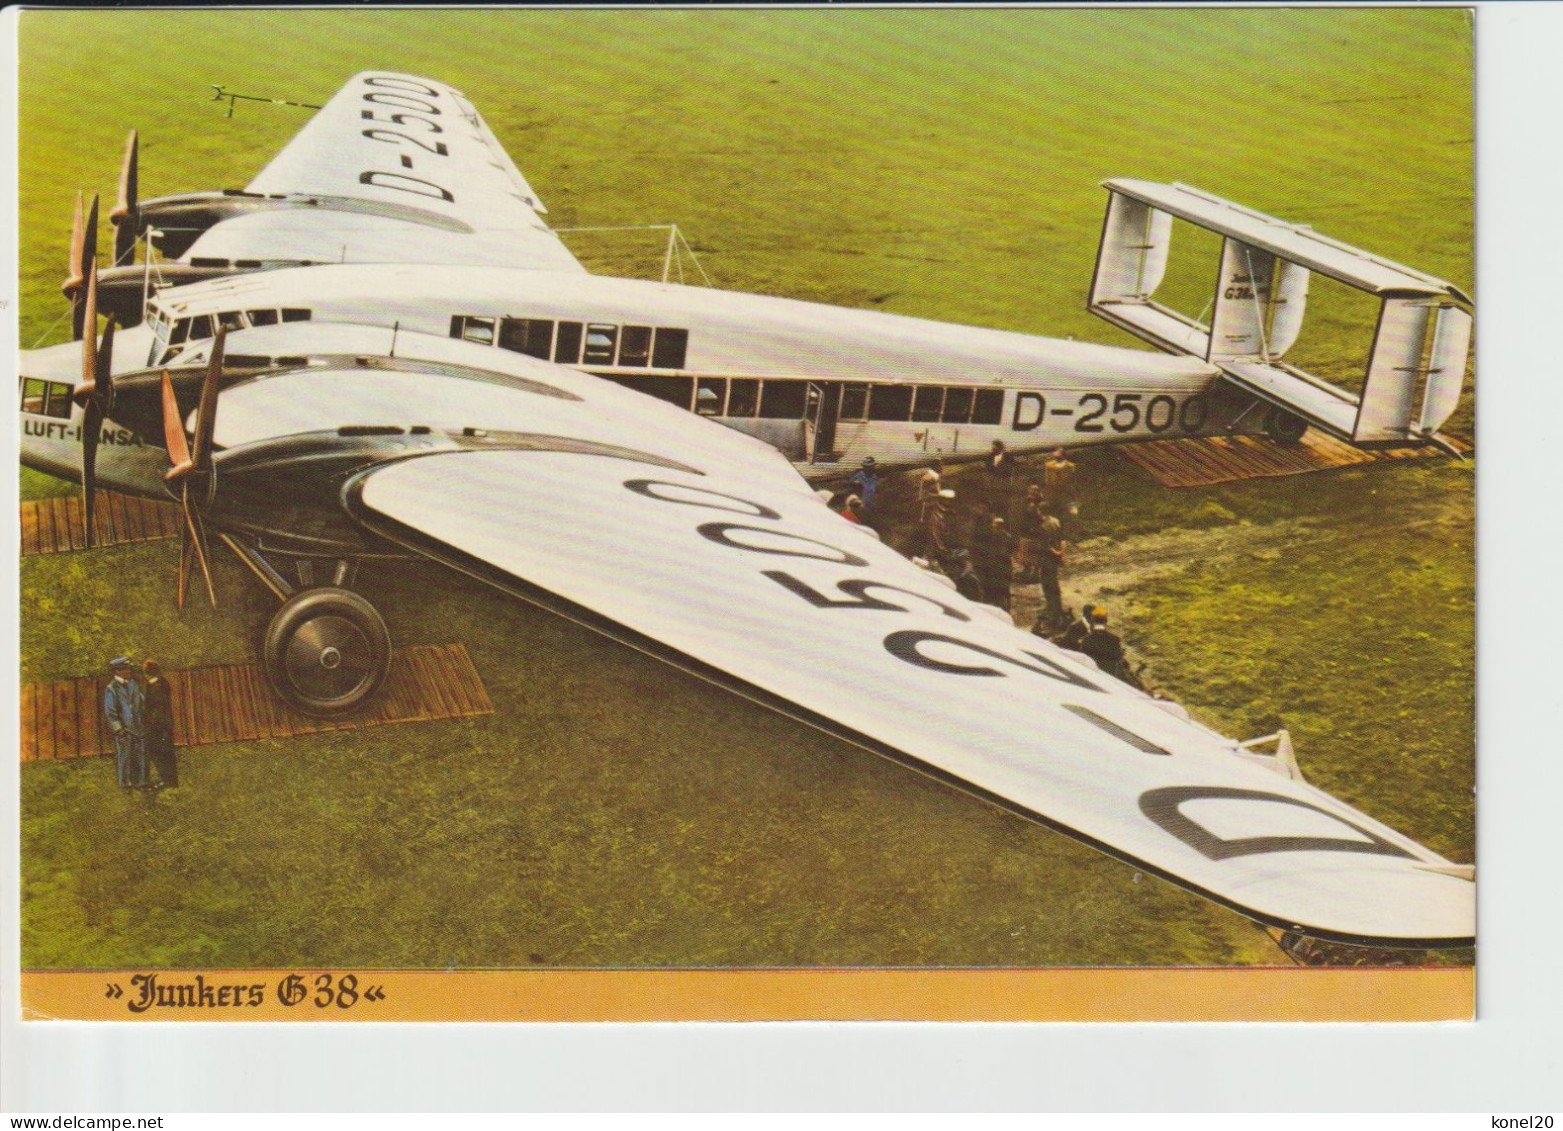 Pc Lufthansa Junkers G-38 Aircraft - 1919-1938: Entre Guerres